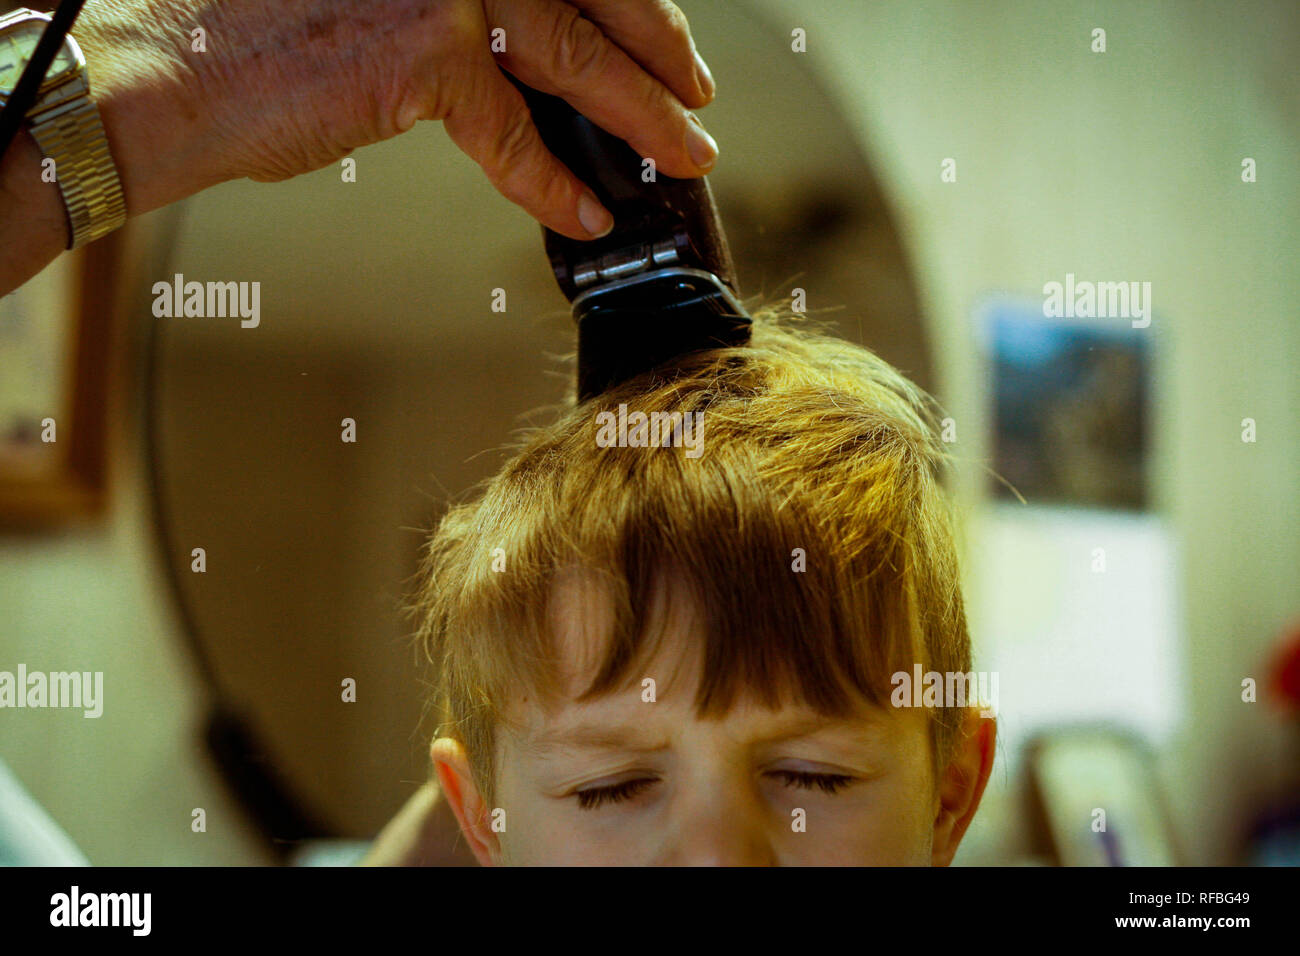 A young boy has his hair cut at a smalltown babershop.. Stock Photo